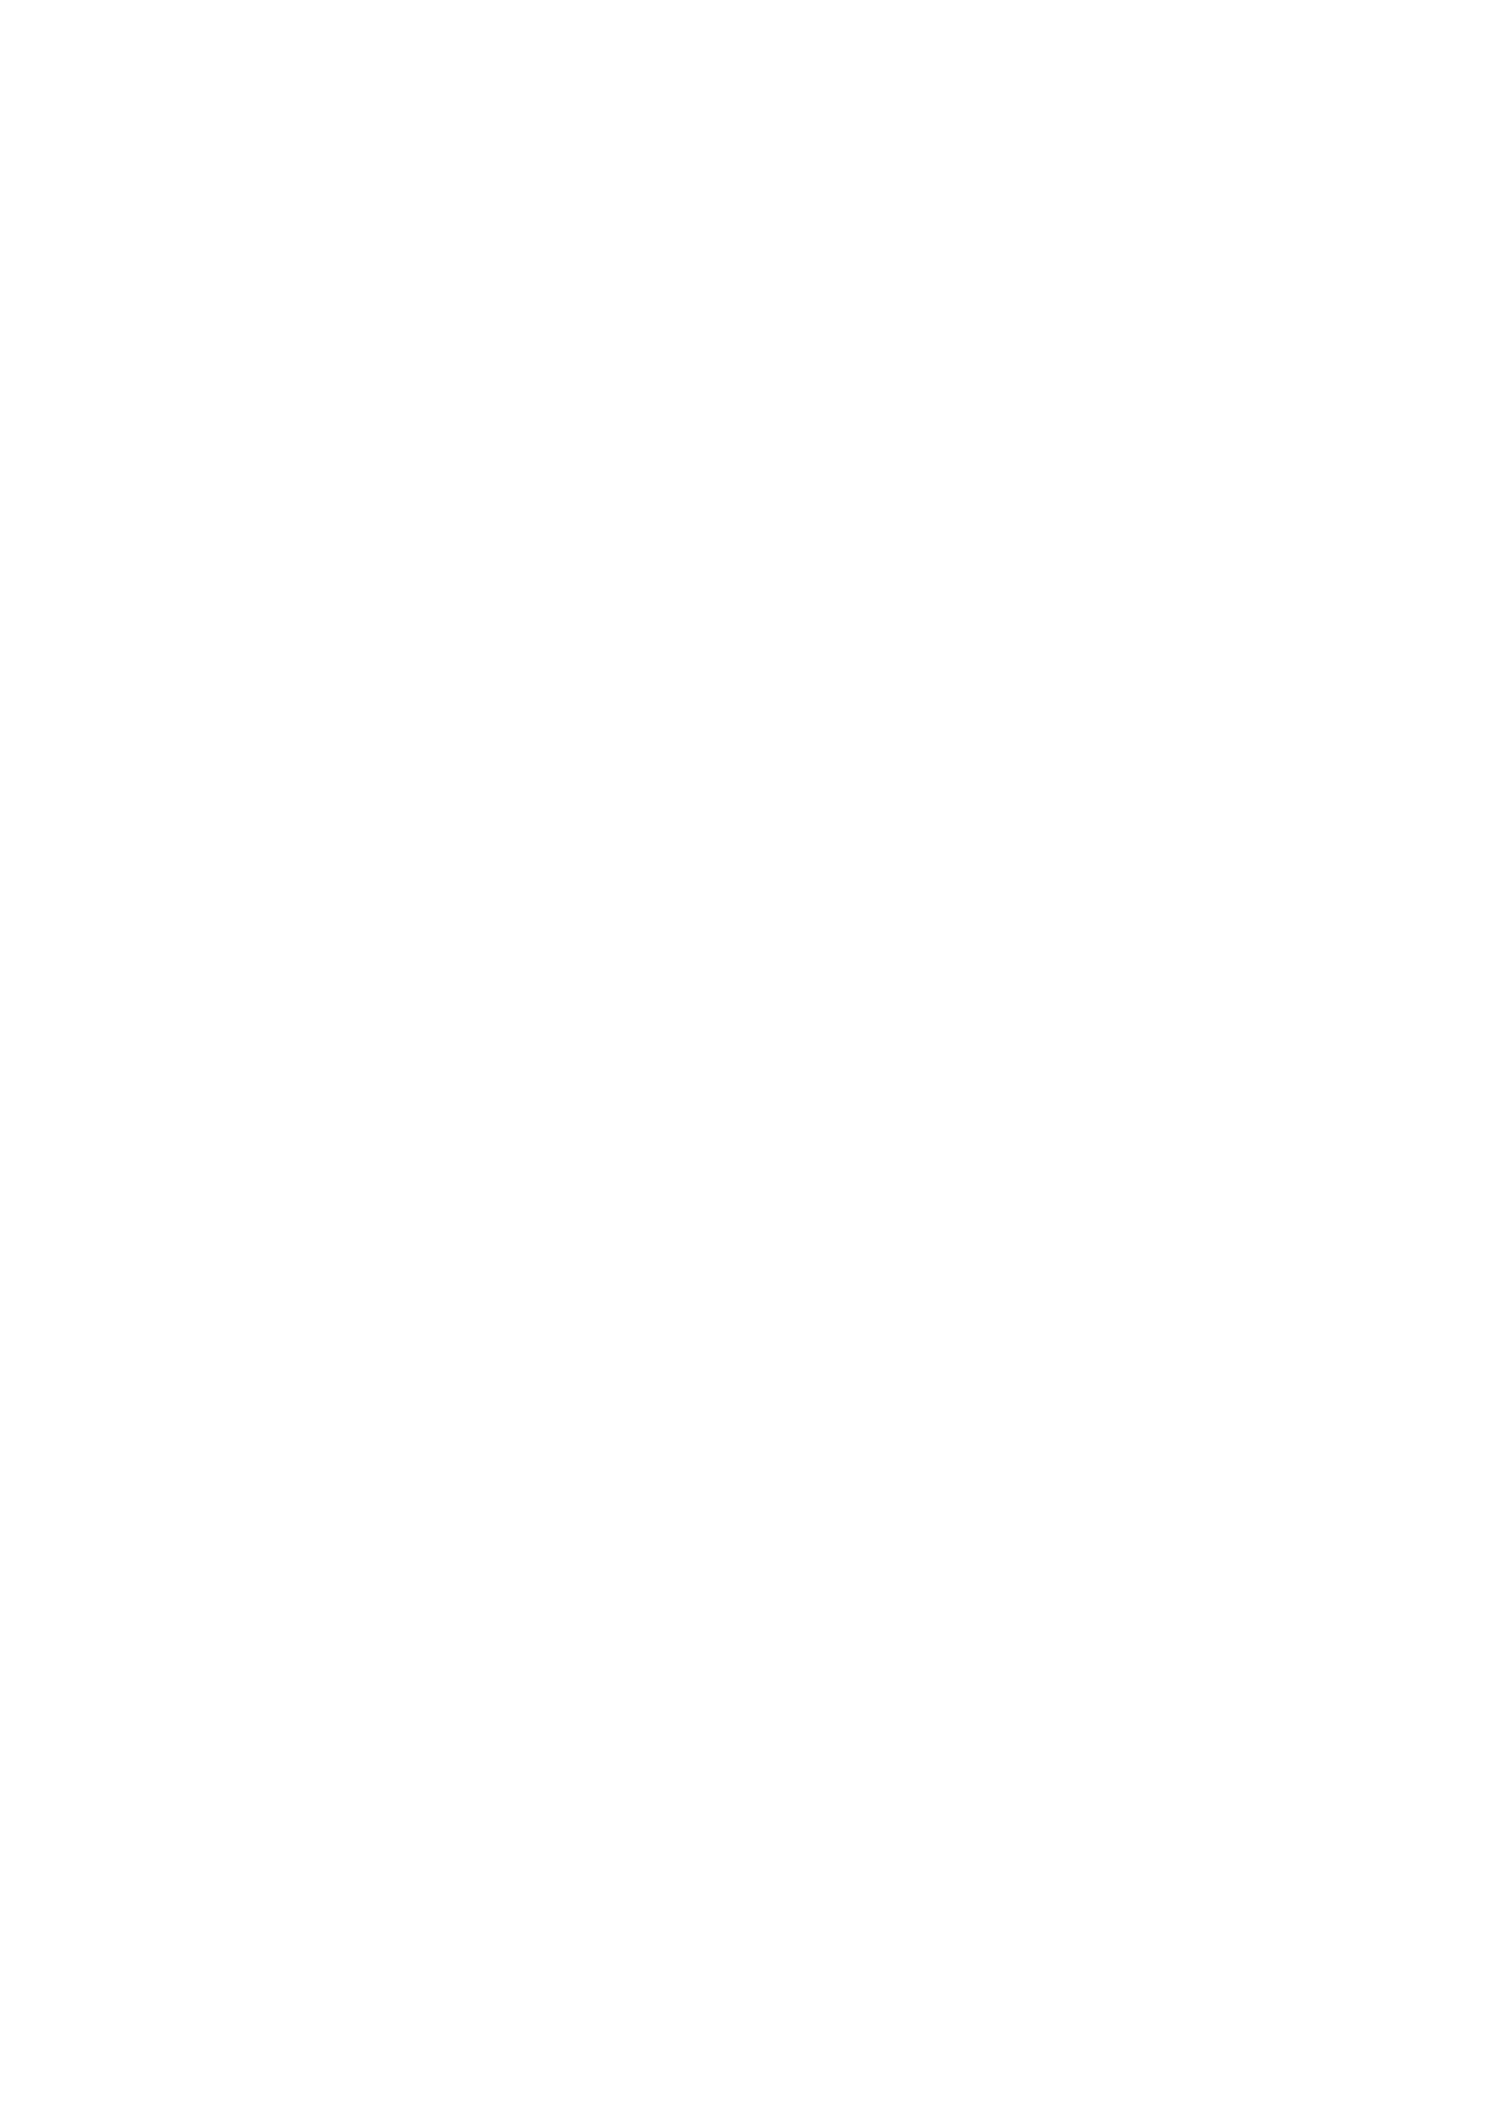 Bandit 30